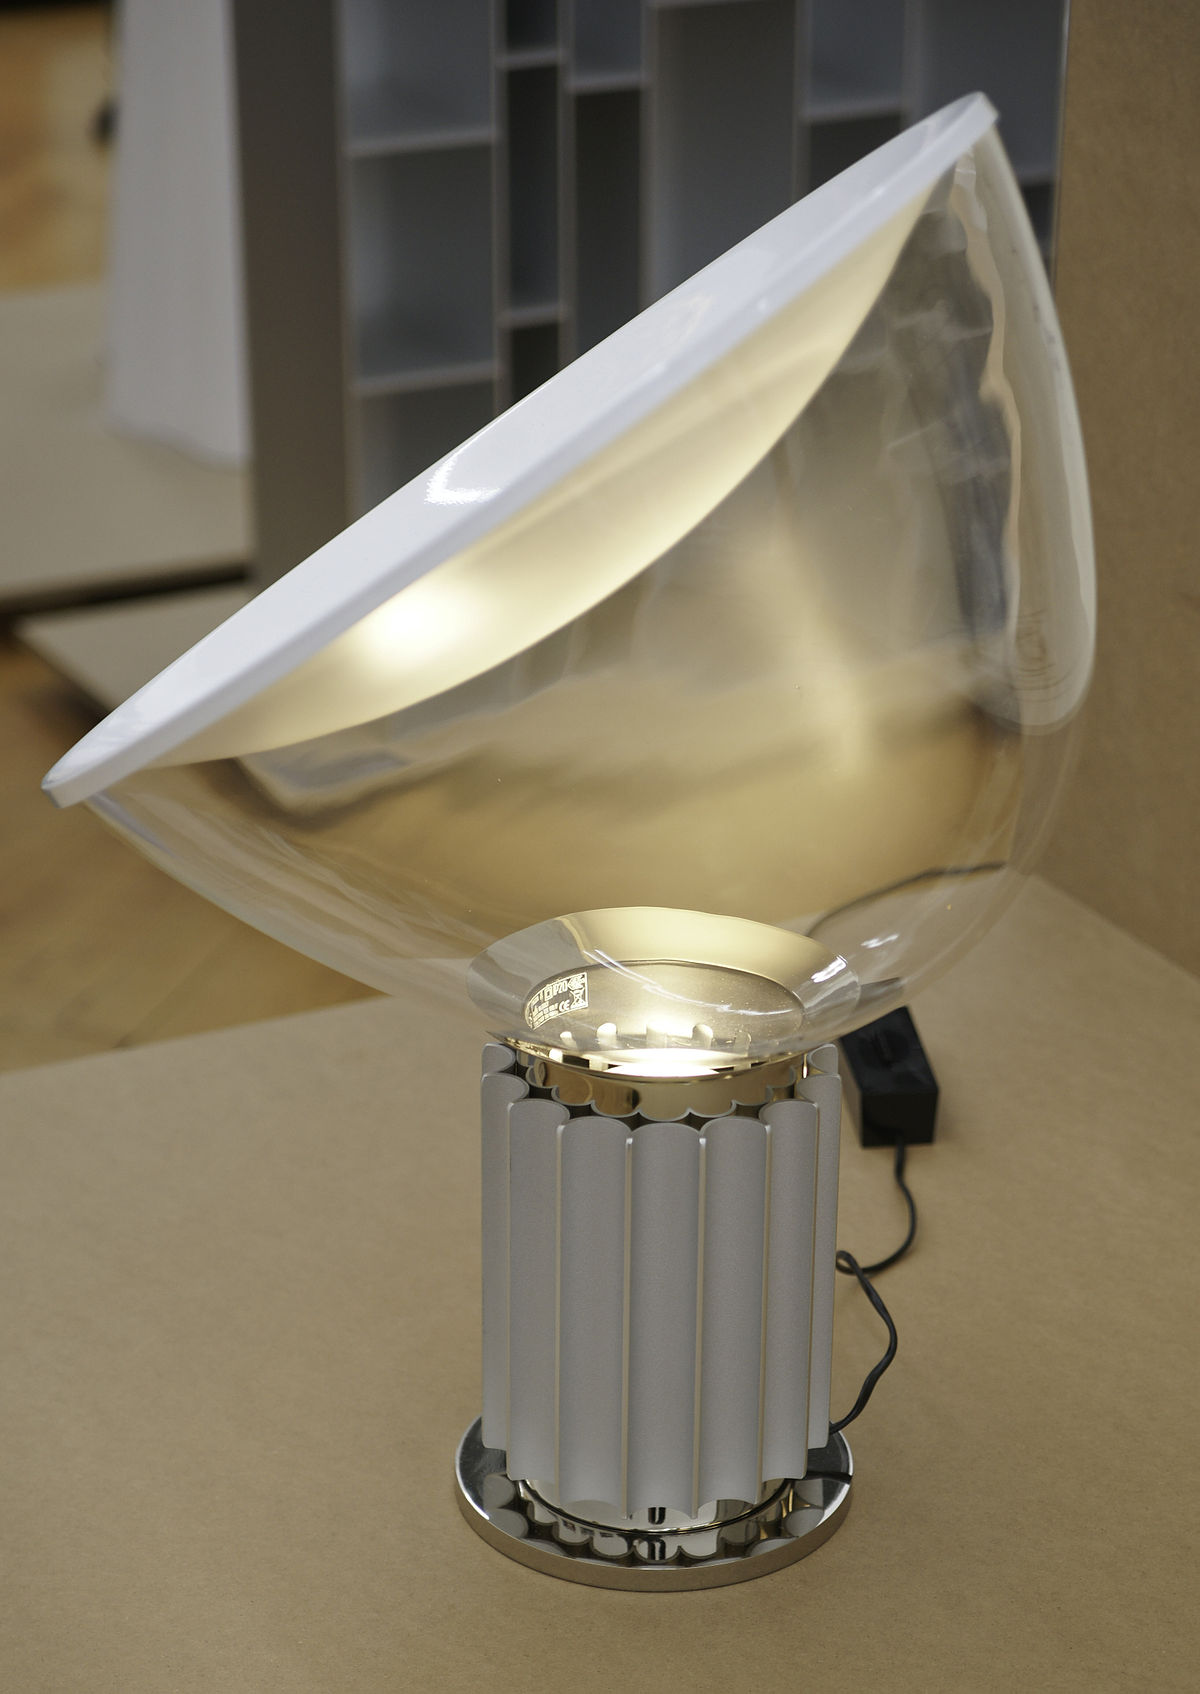 Arco (lamp) - Wikipedia